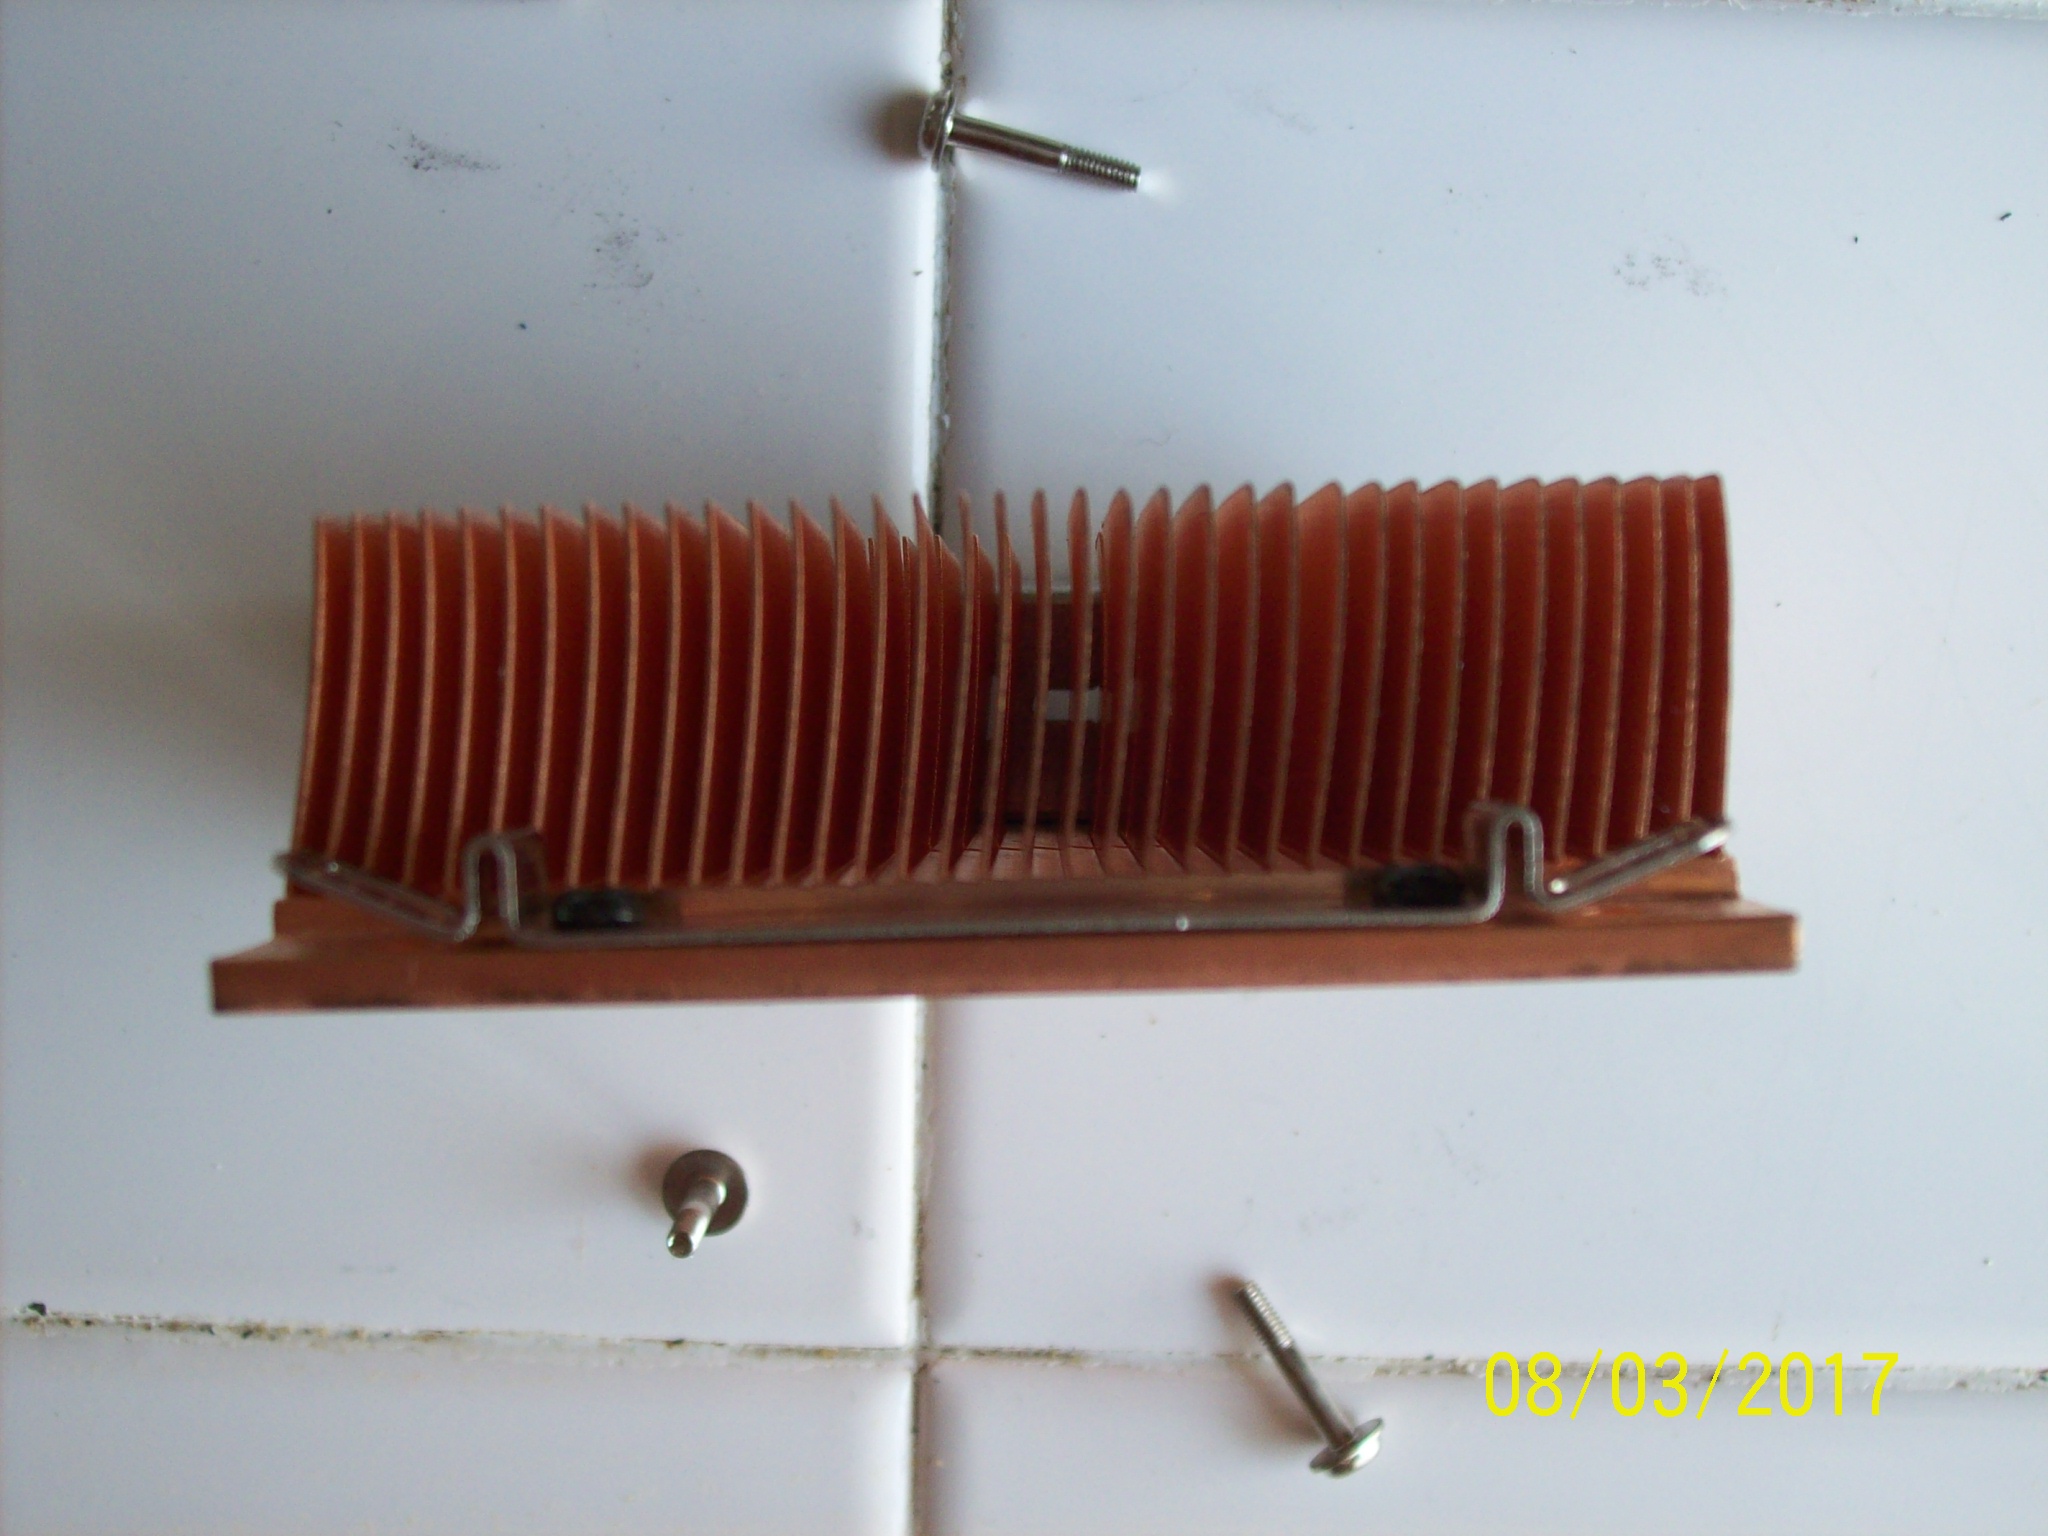 Solid Copper Heatsink with mounting bracket, screws